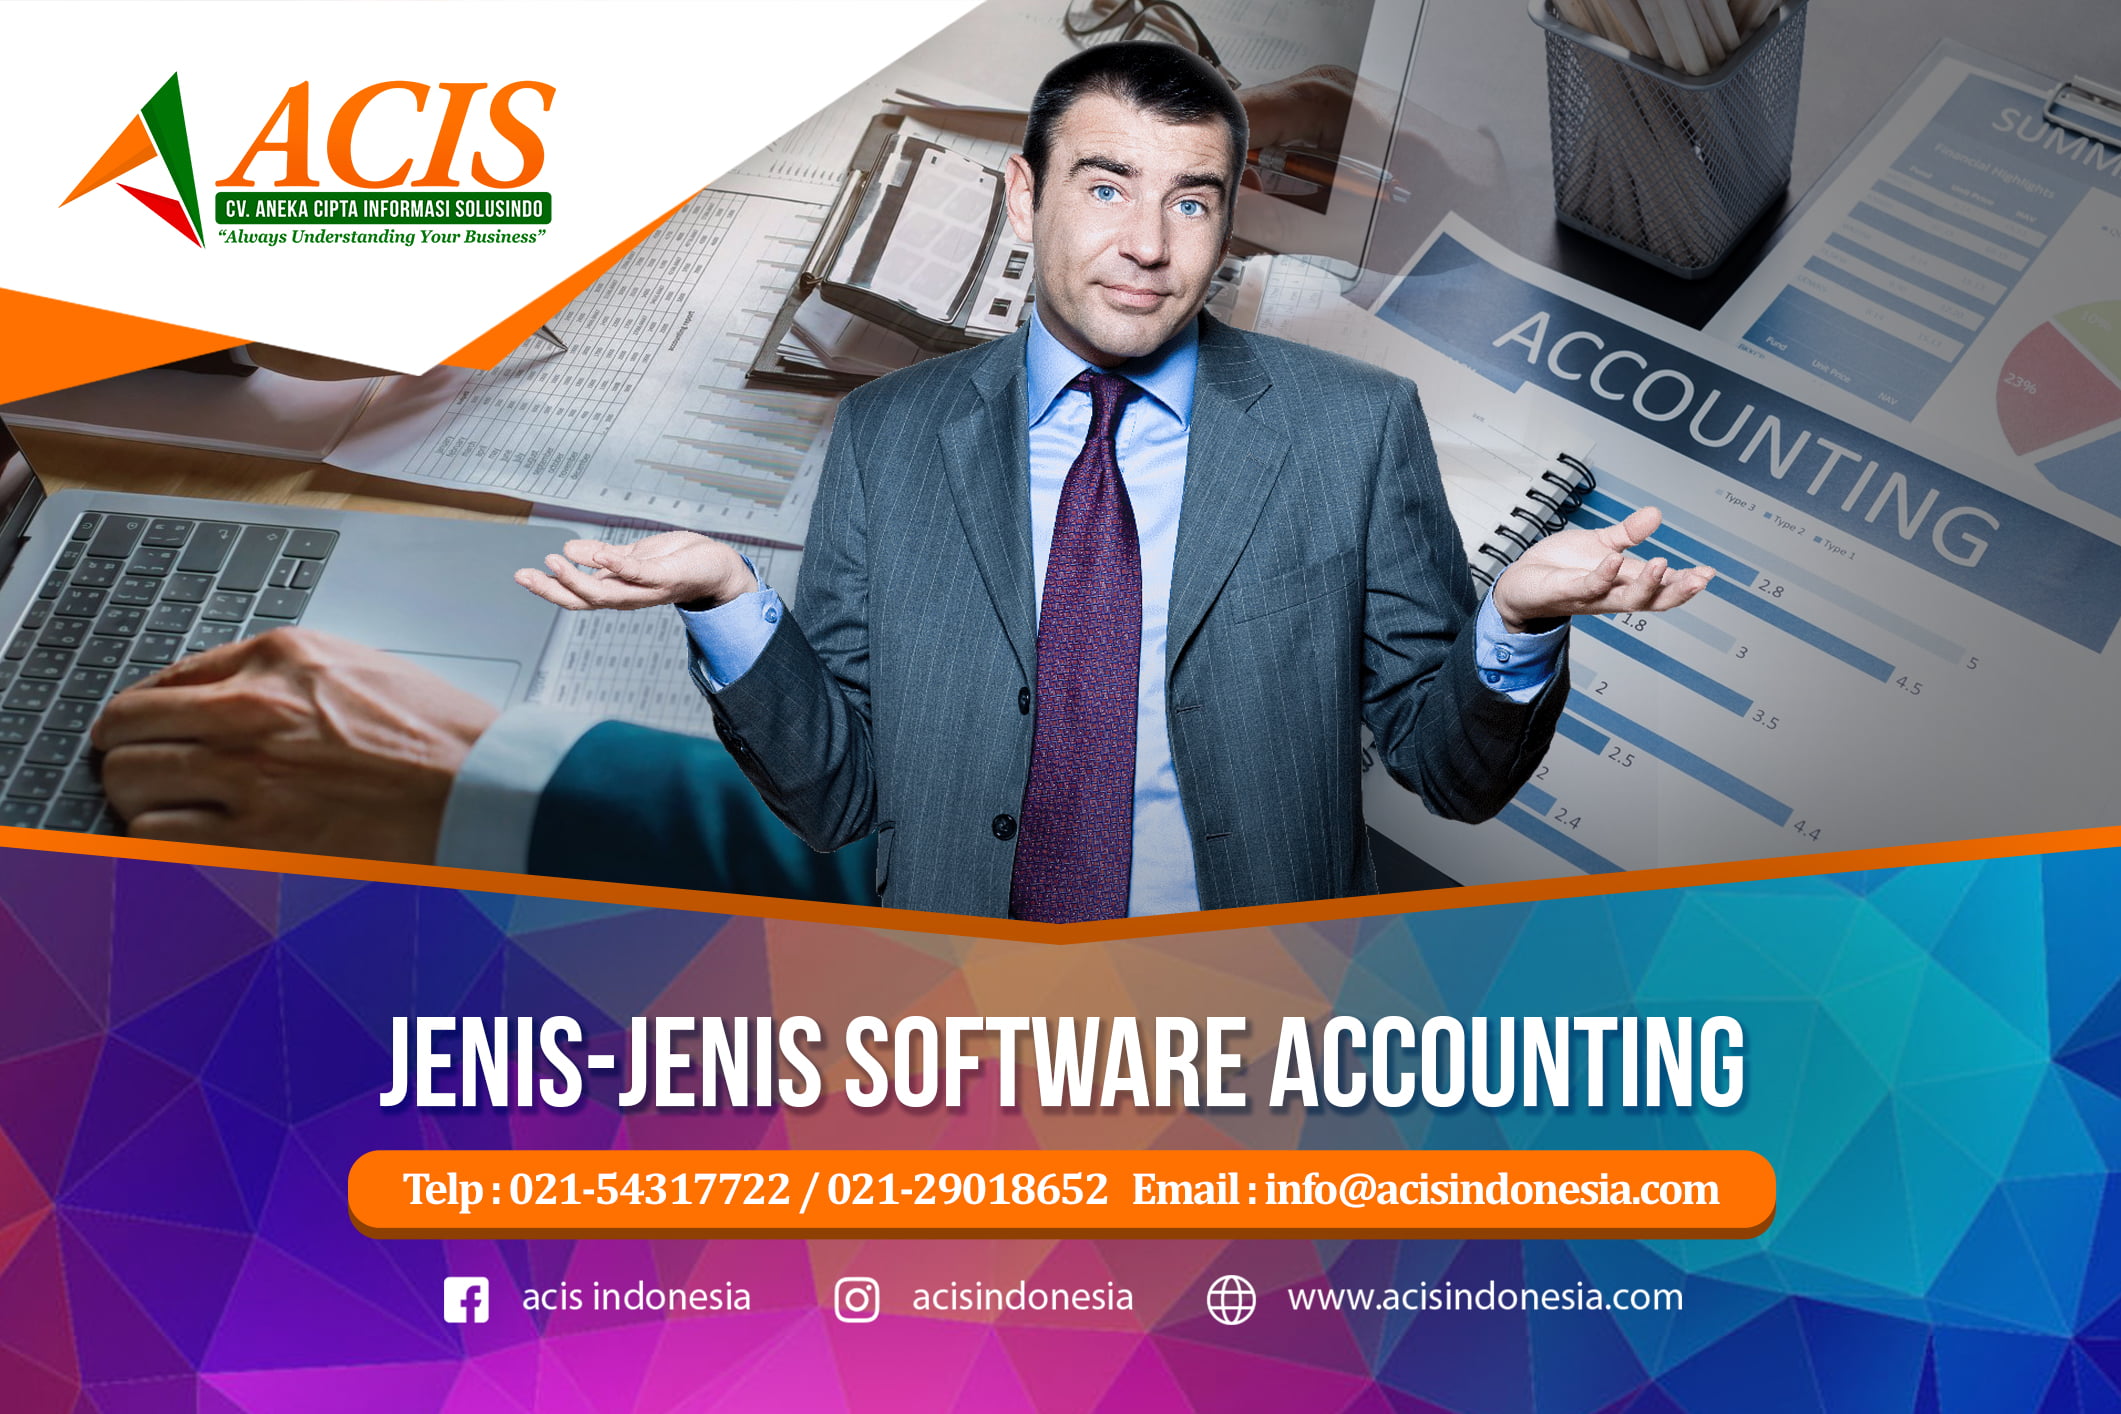 https://www.acisindonesia.com/wp-content/uploads/2020/05/Jenis-Jenis-Software-Accounting.jpg